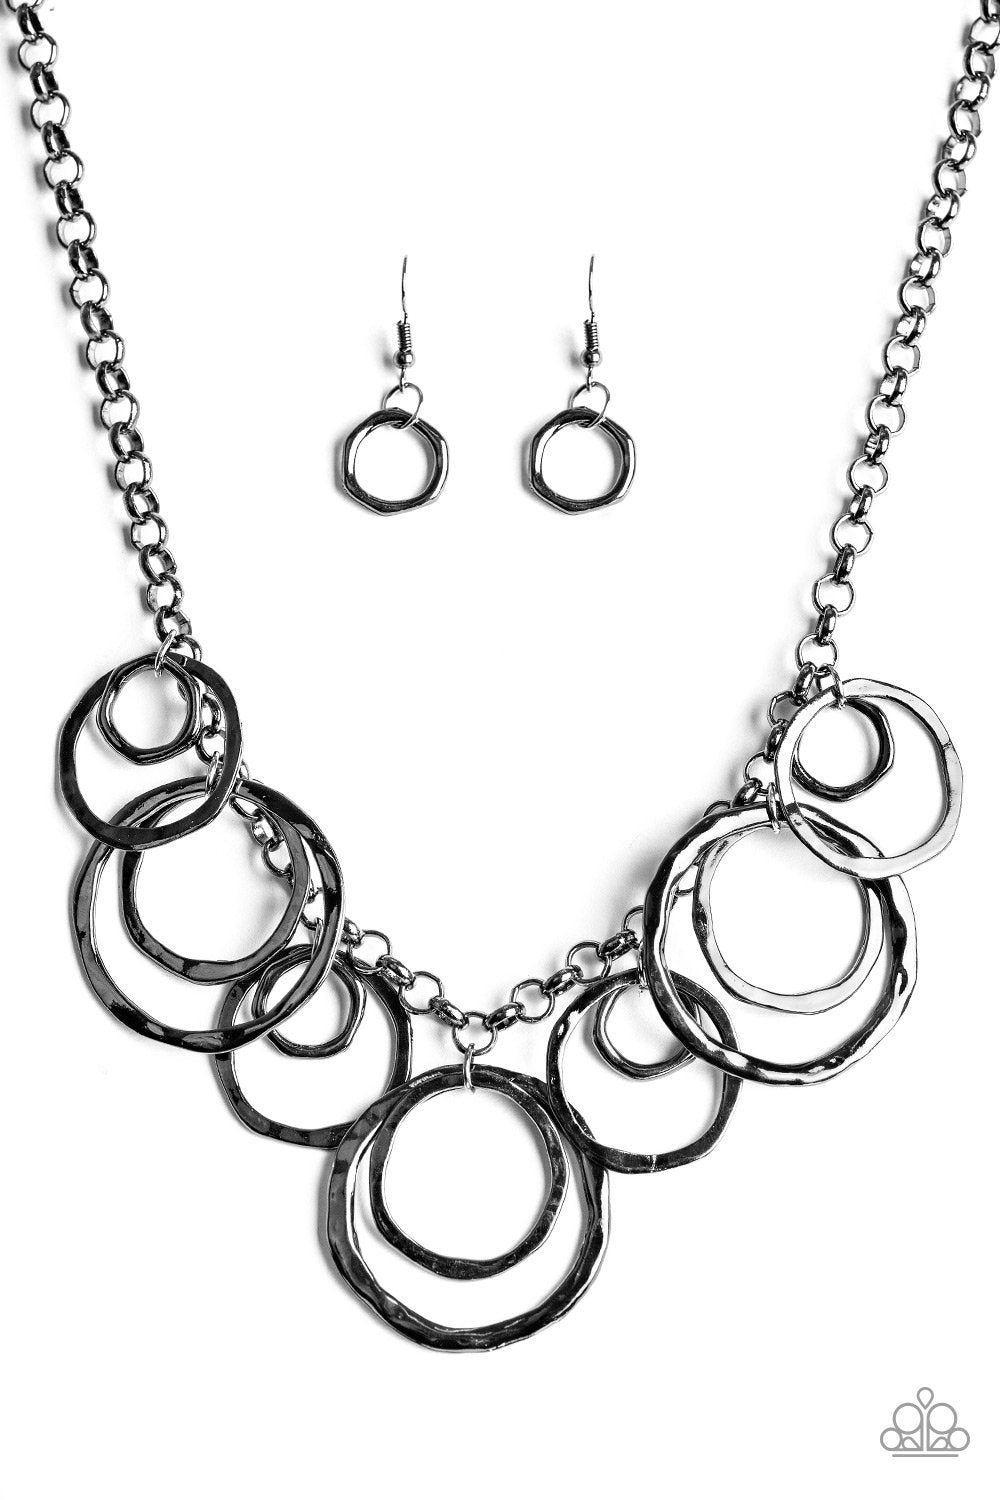 Tour de FIERCE Black Gunmetal Necklace - Paparazzi Accessories-CarasShop.com - $5 Jewelry by Cara Jewels